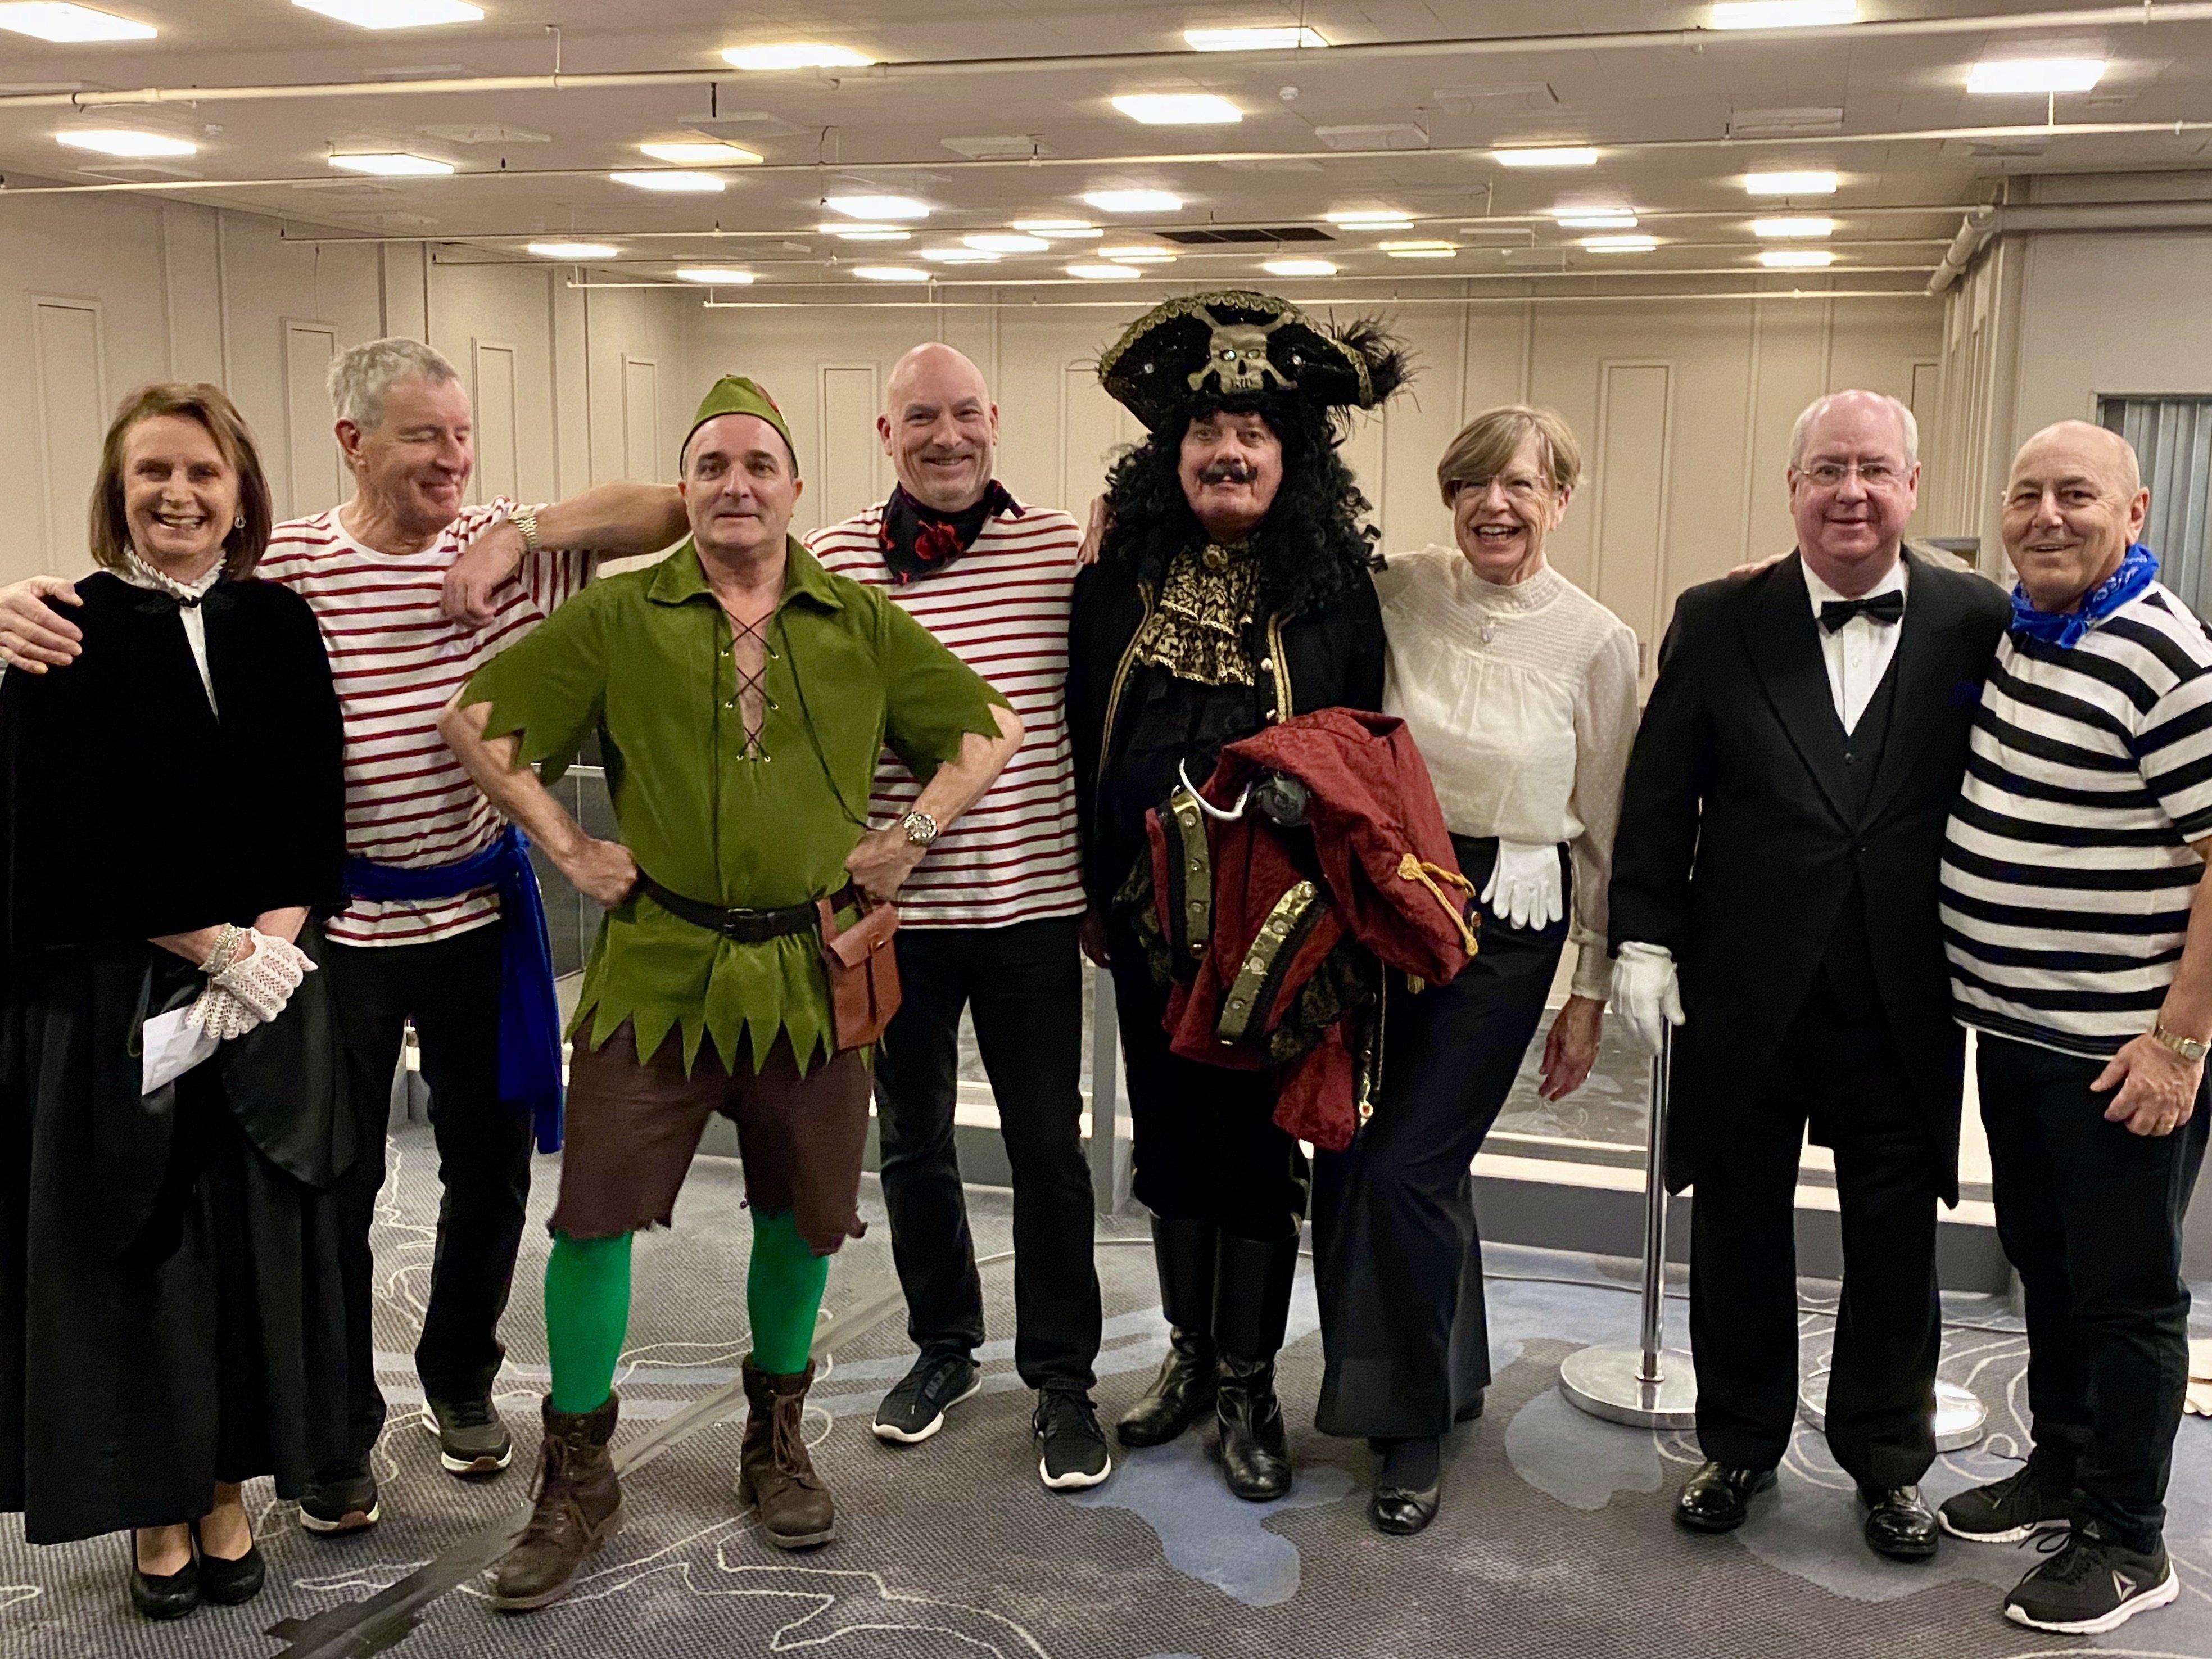 Peter Pan, hook and members of the crew